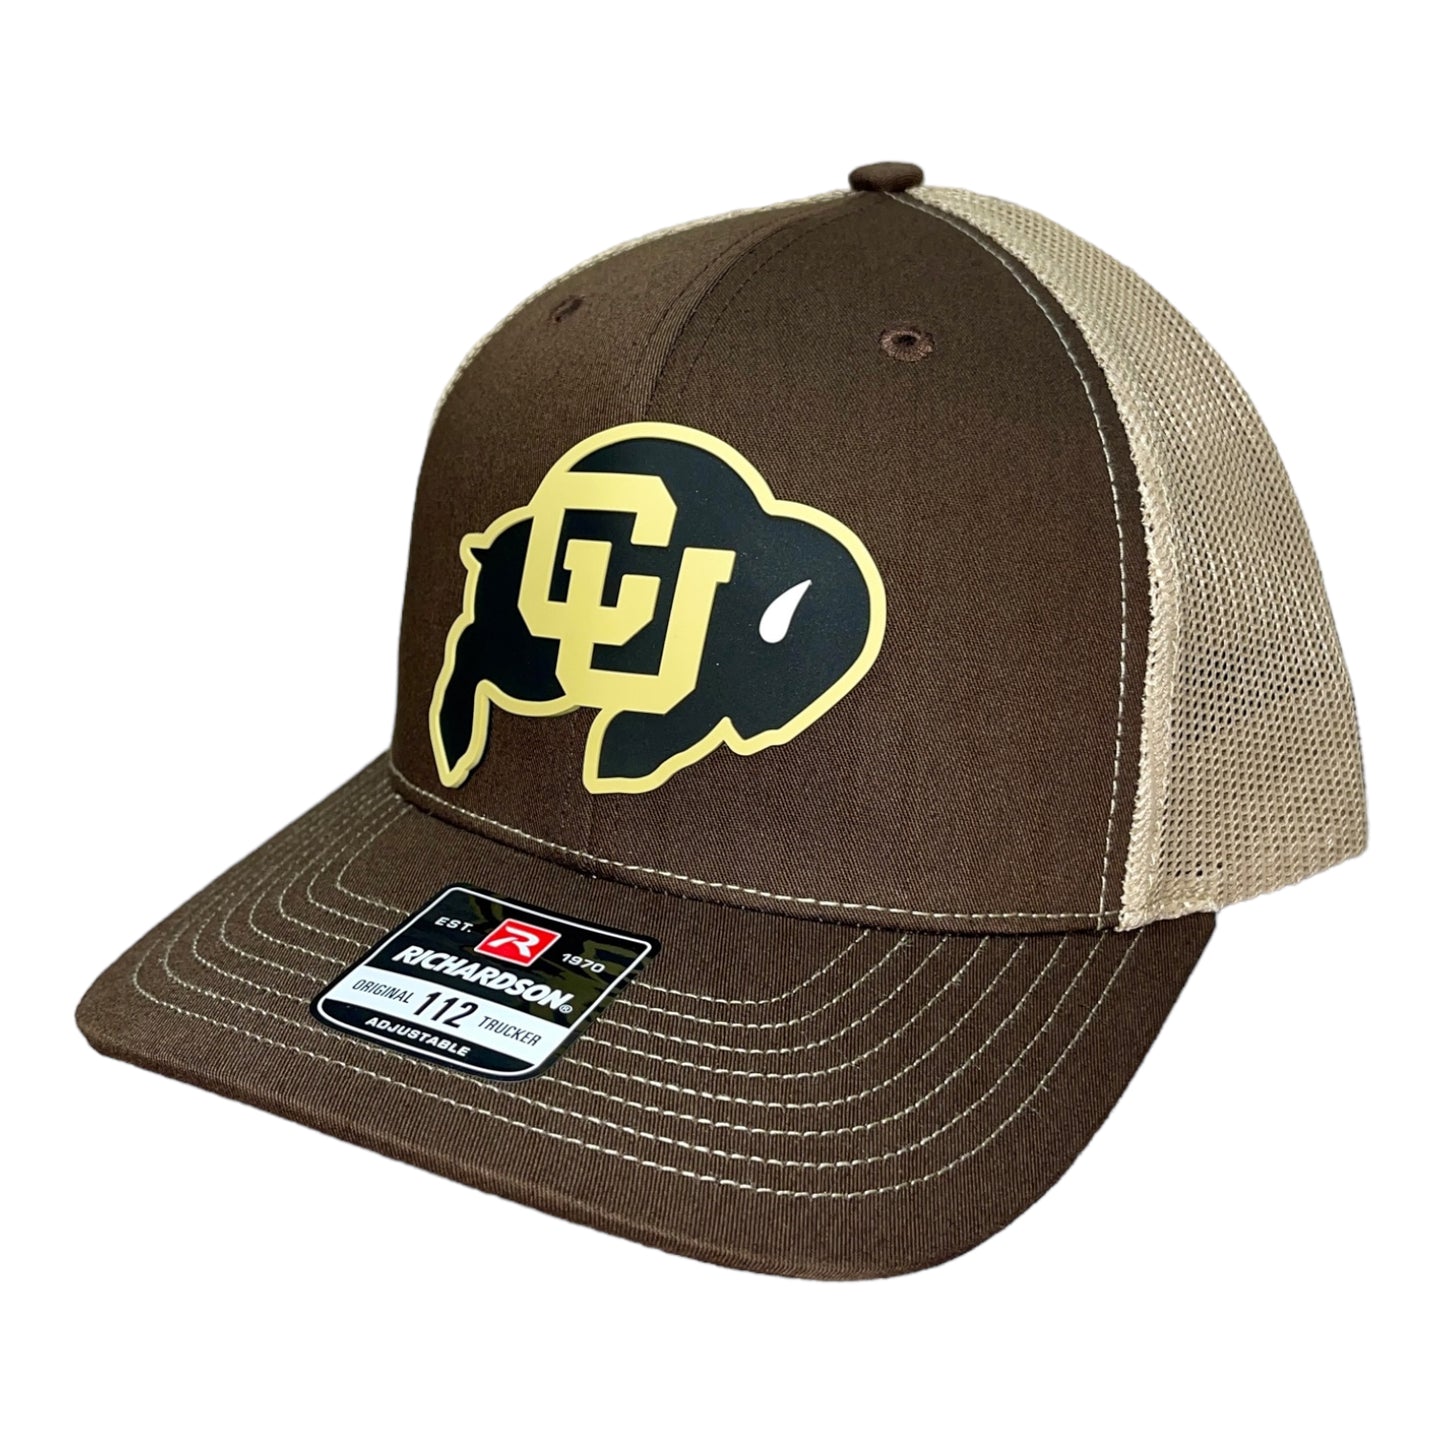 Colorado Buffaloes 3D Patch Snapback Trucker Hat- Brown/ Khaki